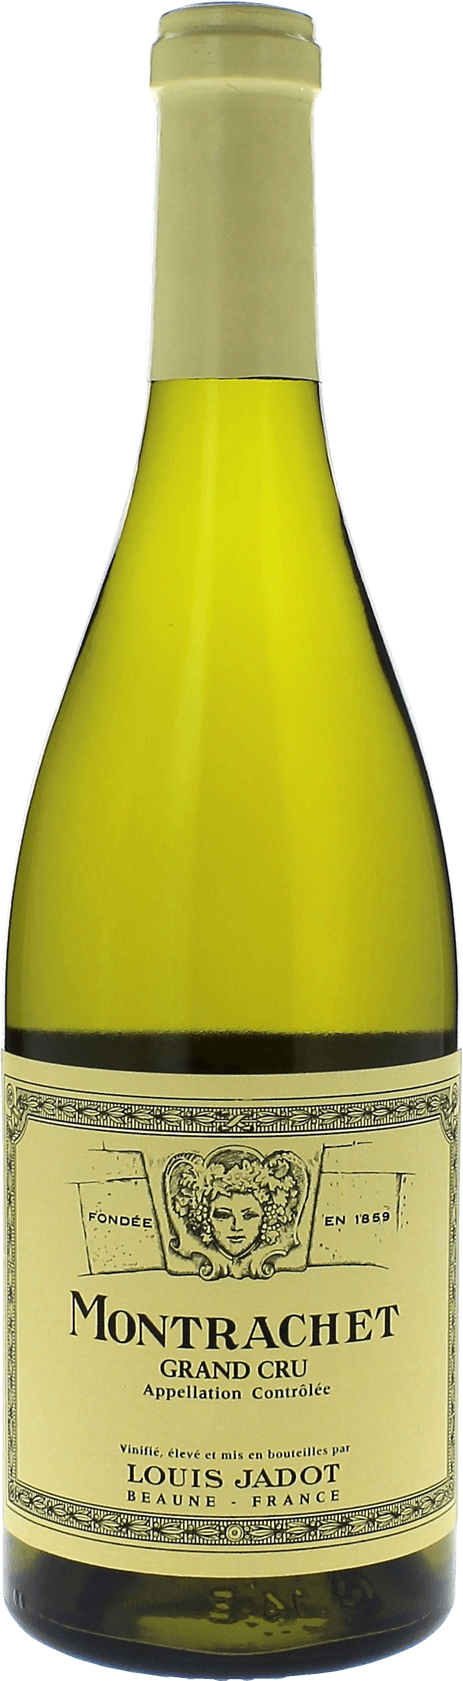 Montrachet grand cru 2016  Jadot Louis, Bourgogne blanc